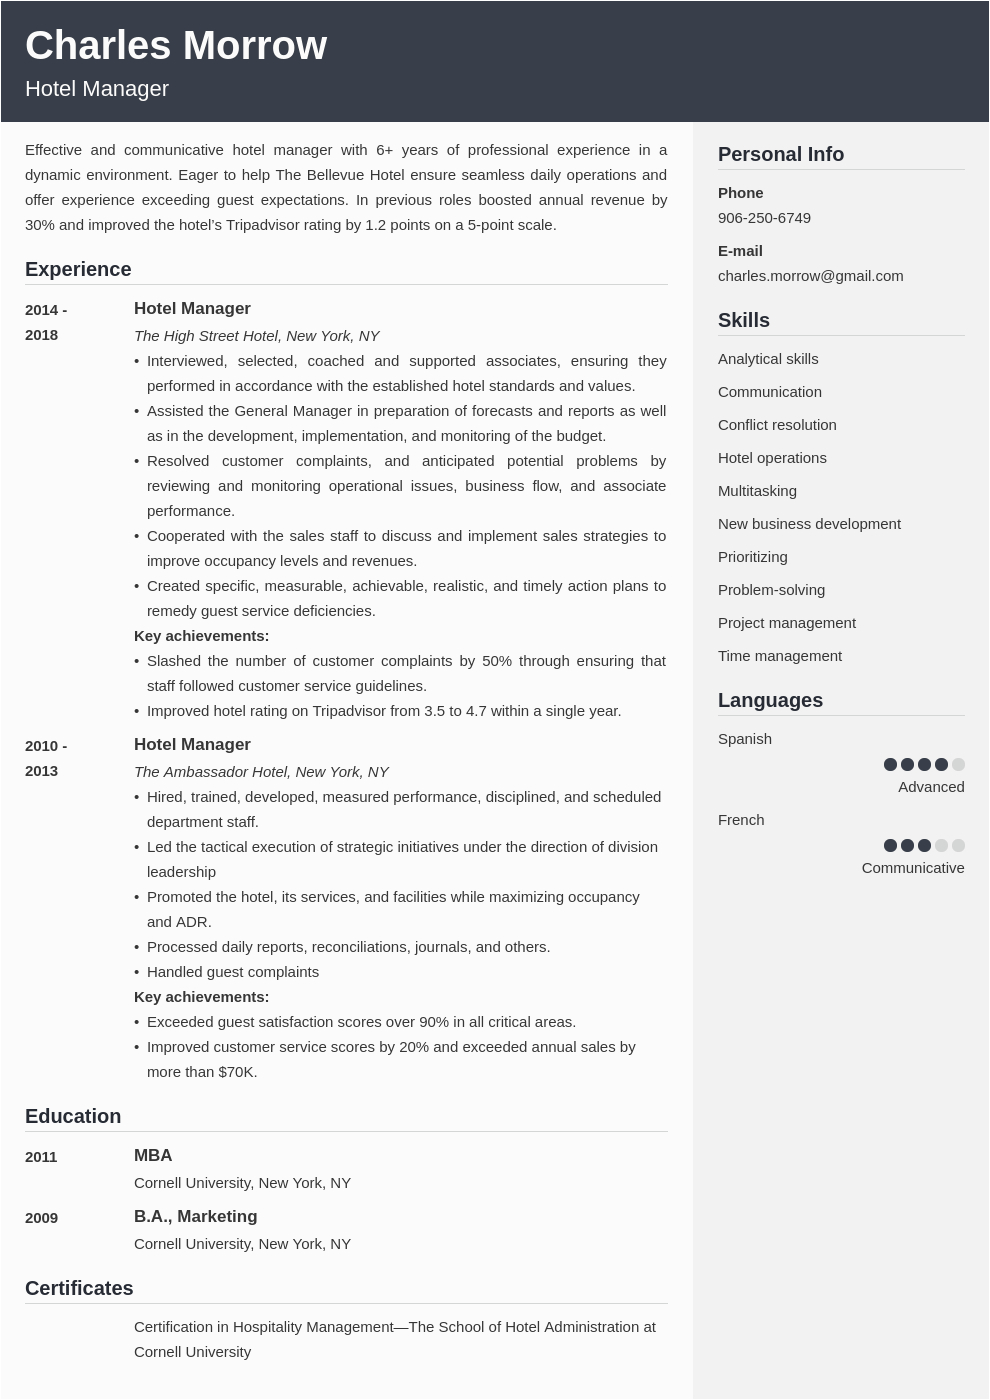 Sample Of Resume for Hotel Management Hotel Manager Resume Sample & Writing Guide [20 Tips]